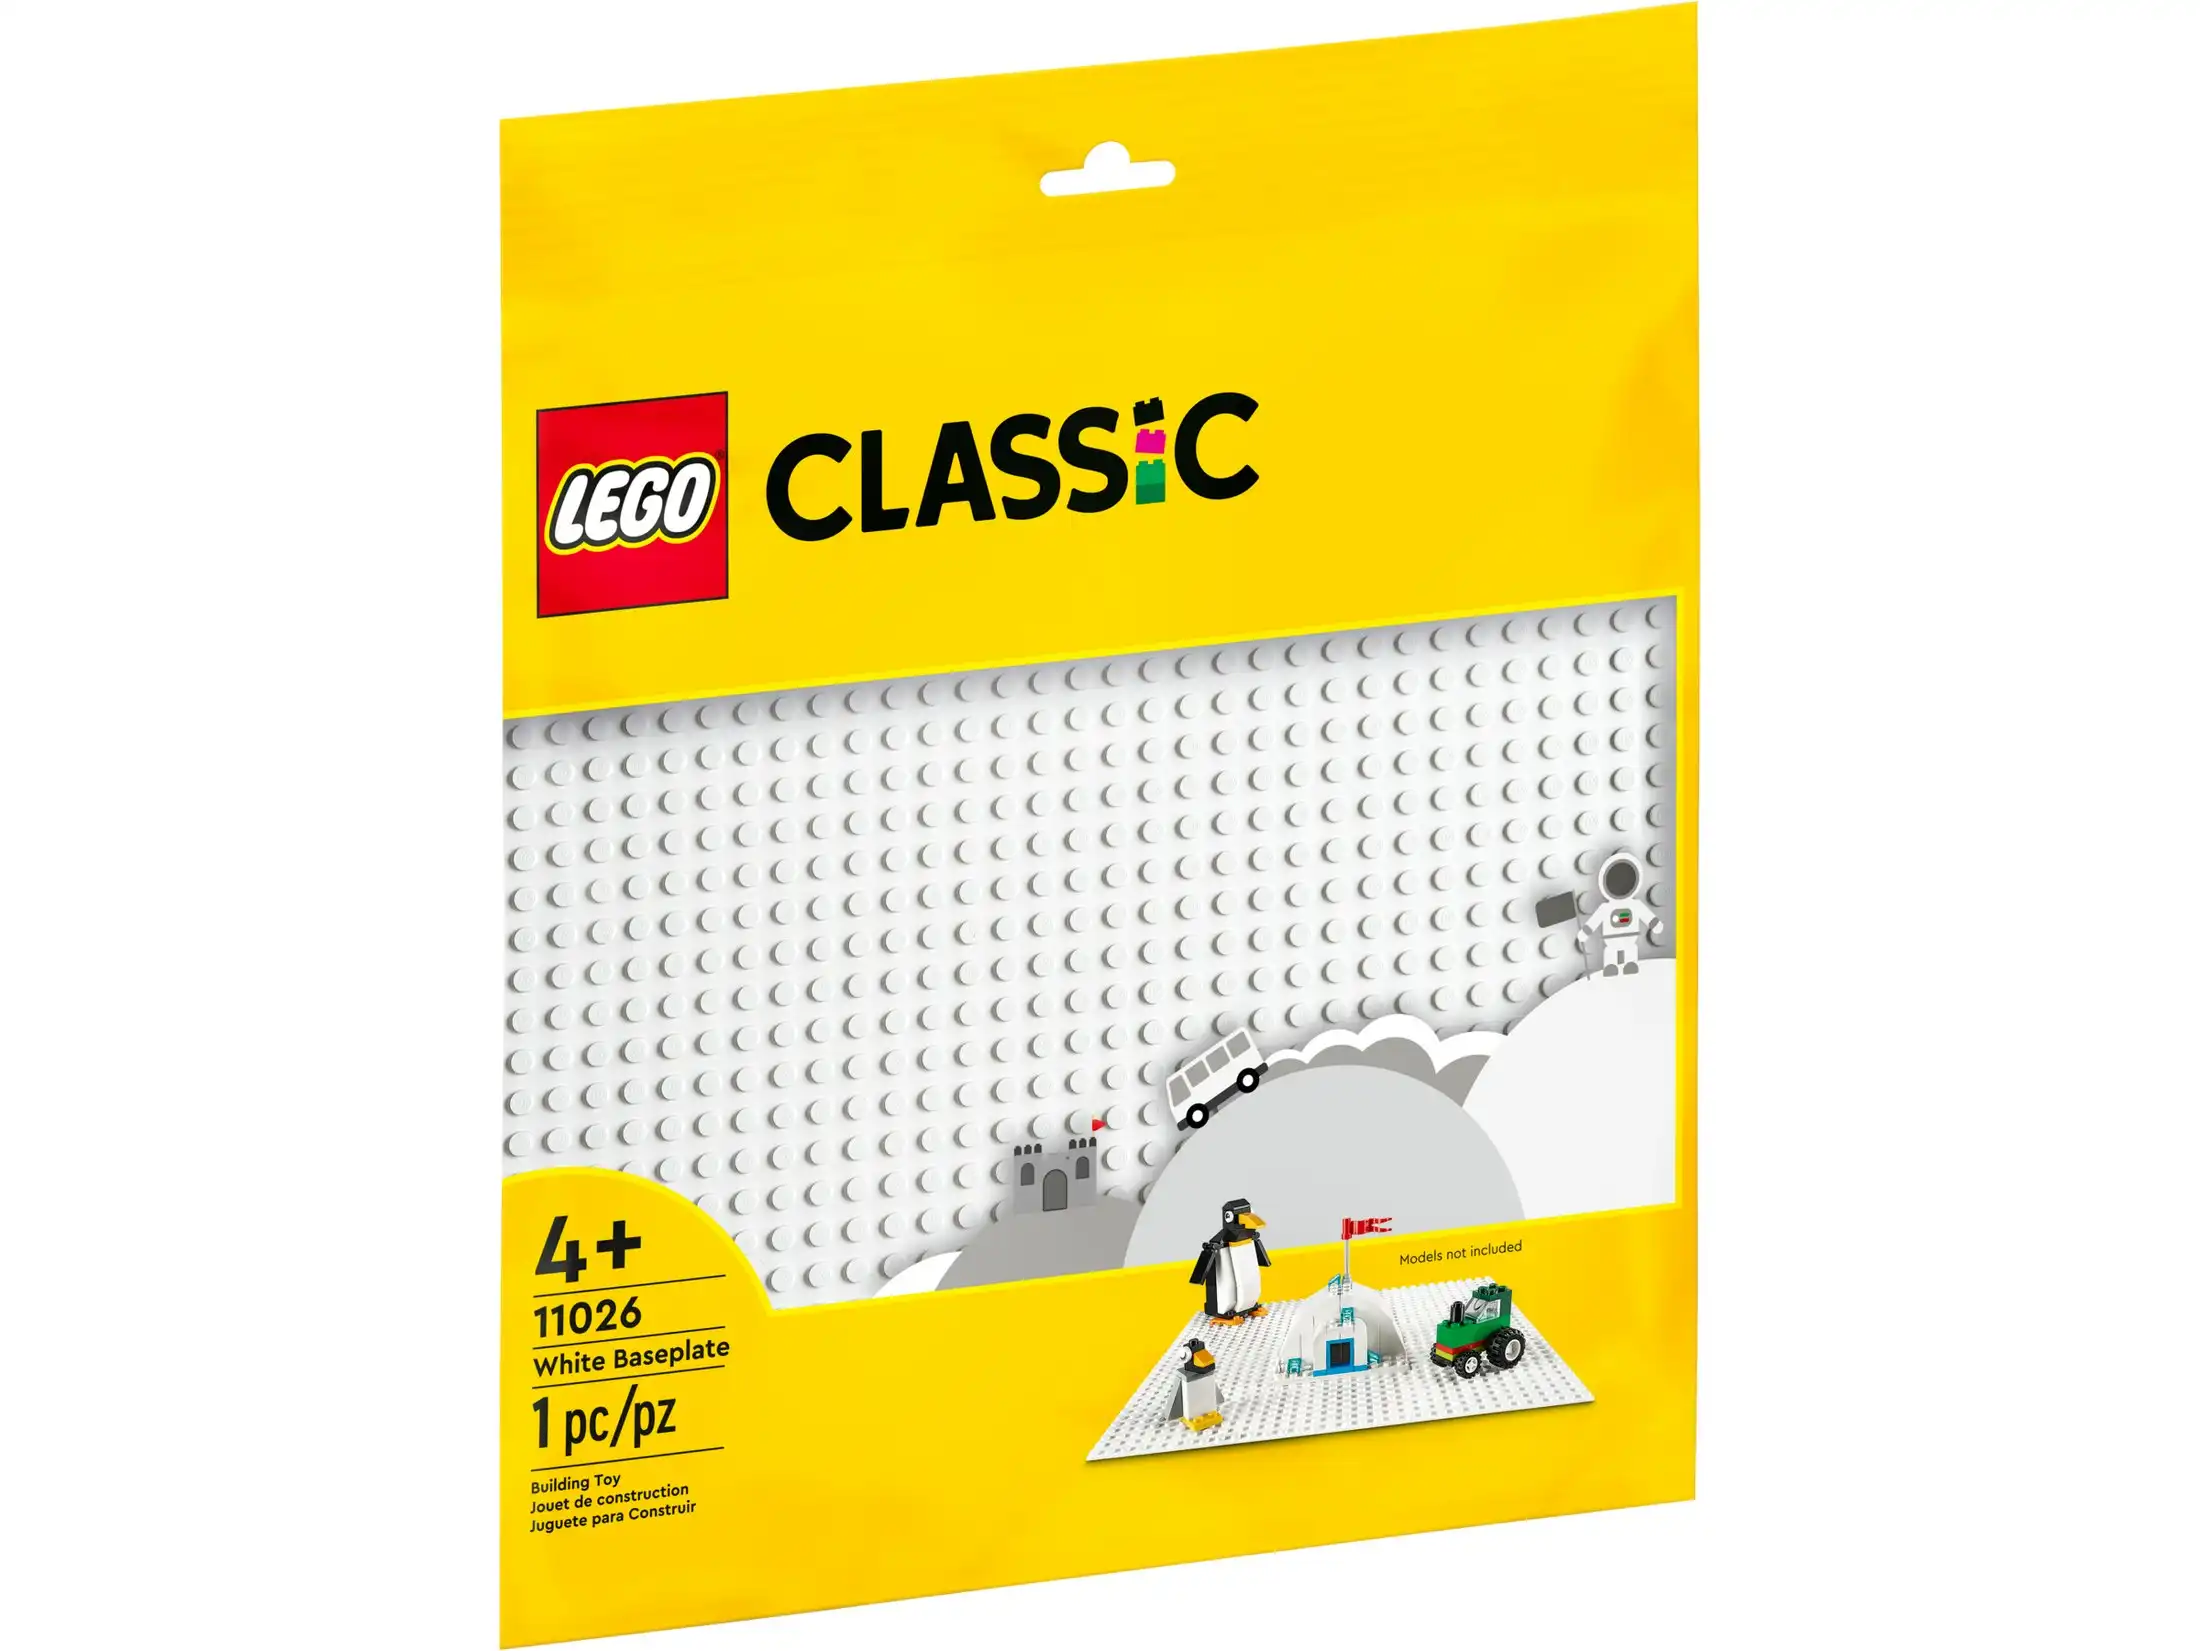 LEGO 11026 White Baseplate - Classic 4+